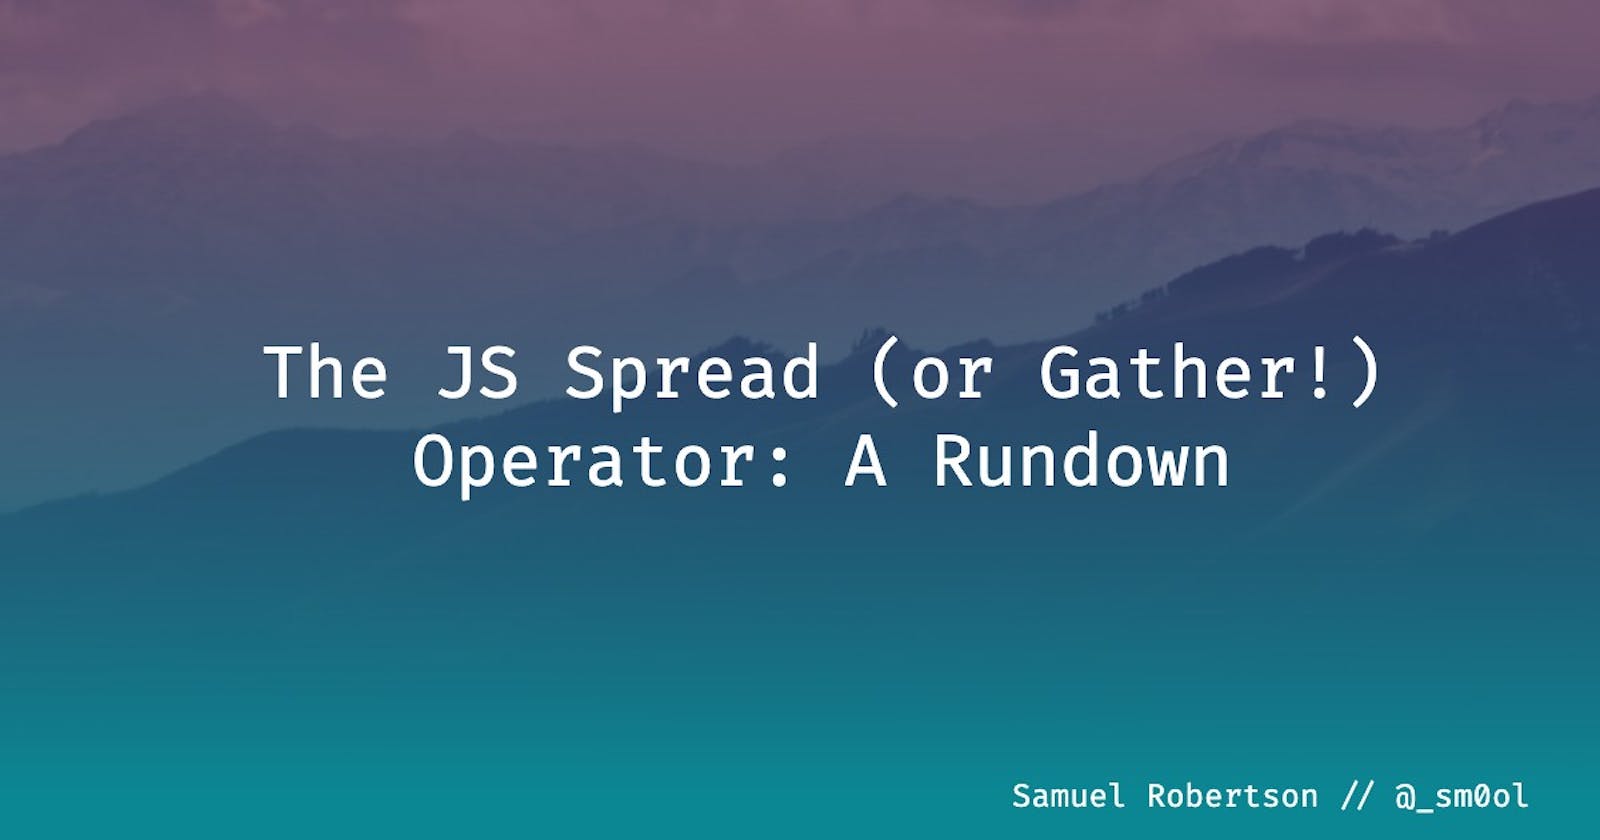 The JS Spread (or Gather!) Operator: A Rundown